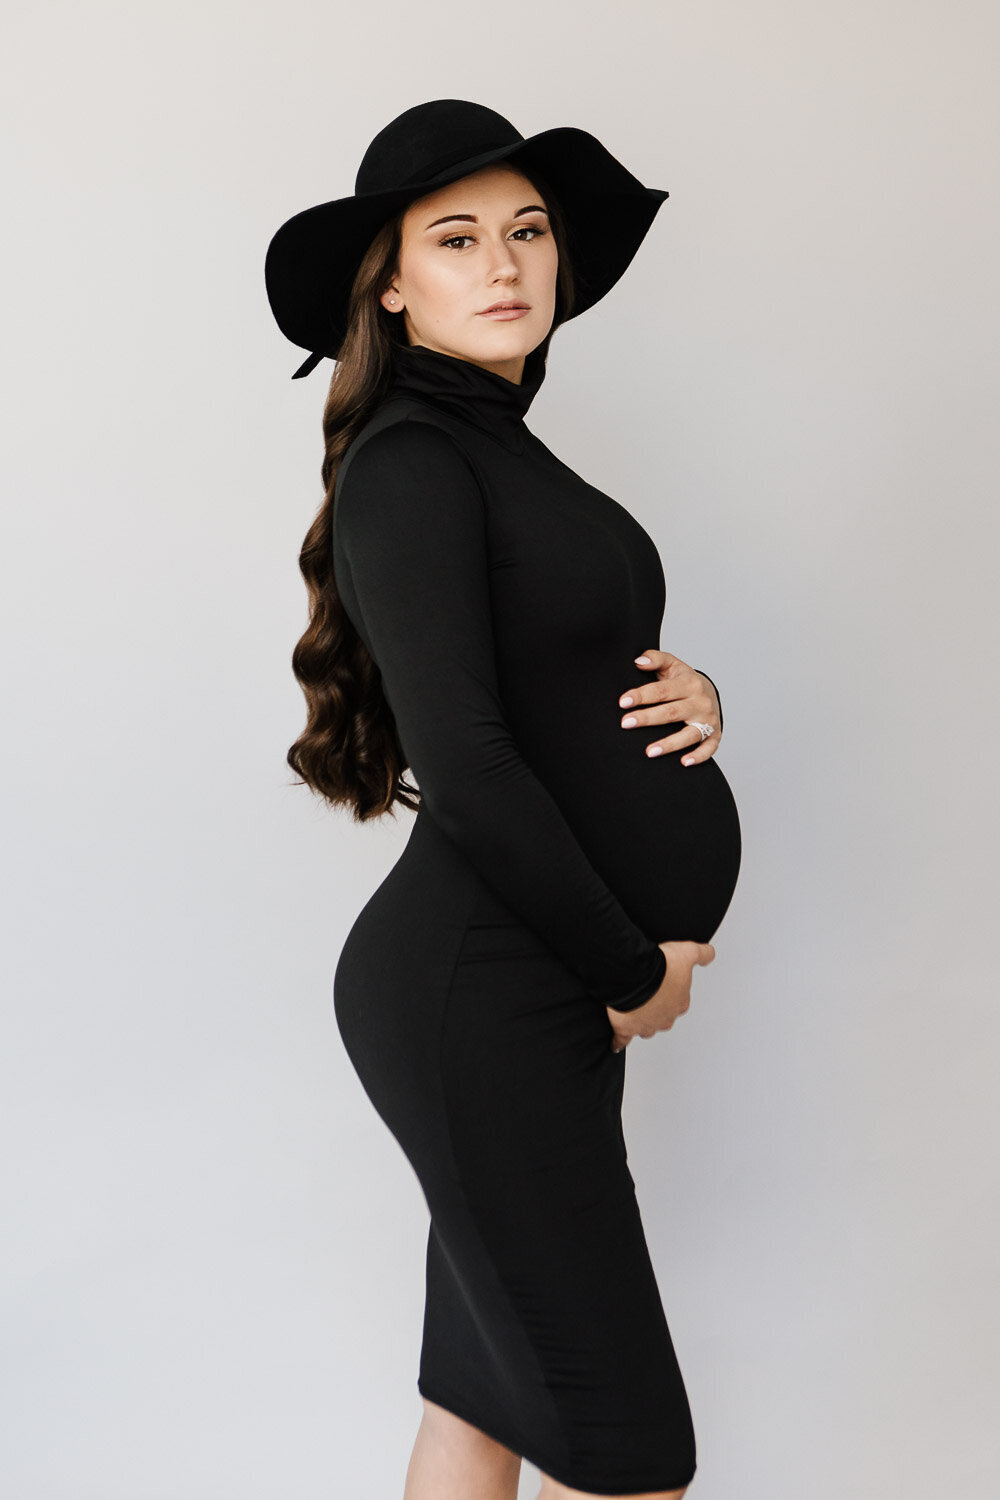 Beauty portrait of pregnant woman in black bodycon dress